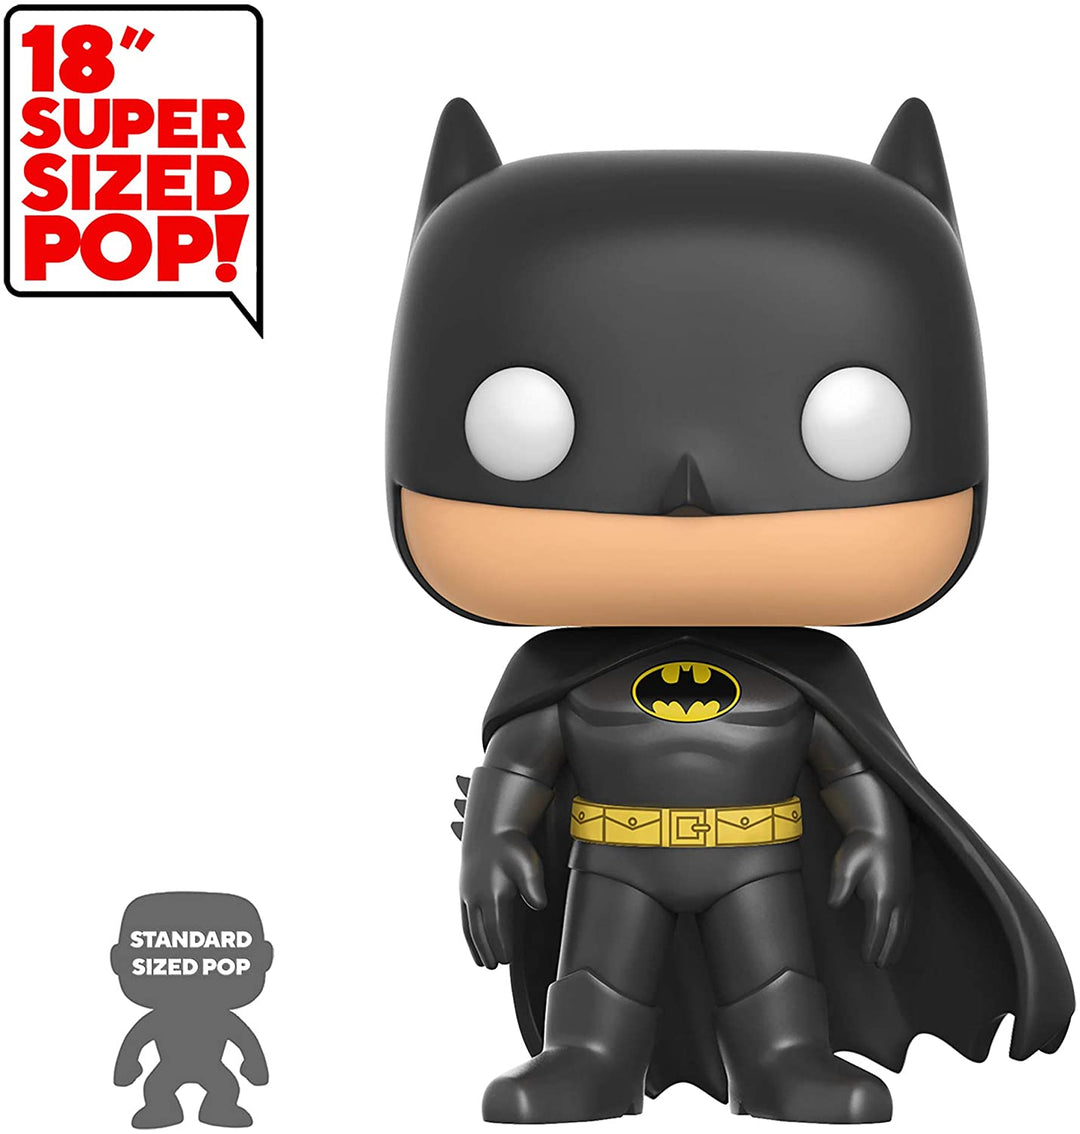 Funko Pop! Heroes: DC - Batman 18" Vinyl Figure